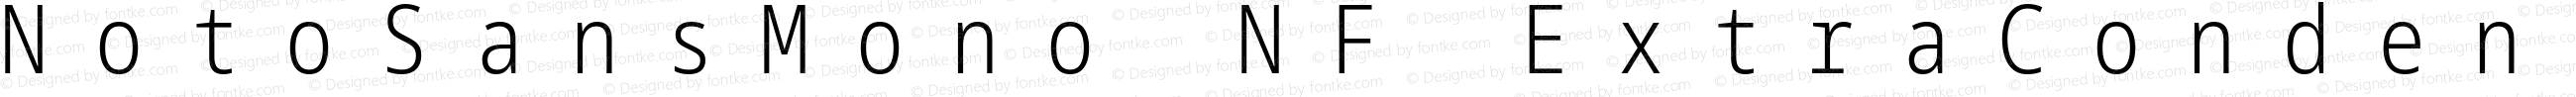 Noto Sans Mono ExtraCondensed Light Nerd Font Complete Mono Windows Compatible